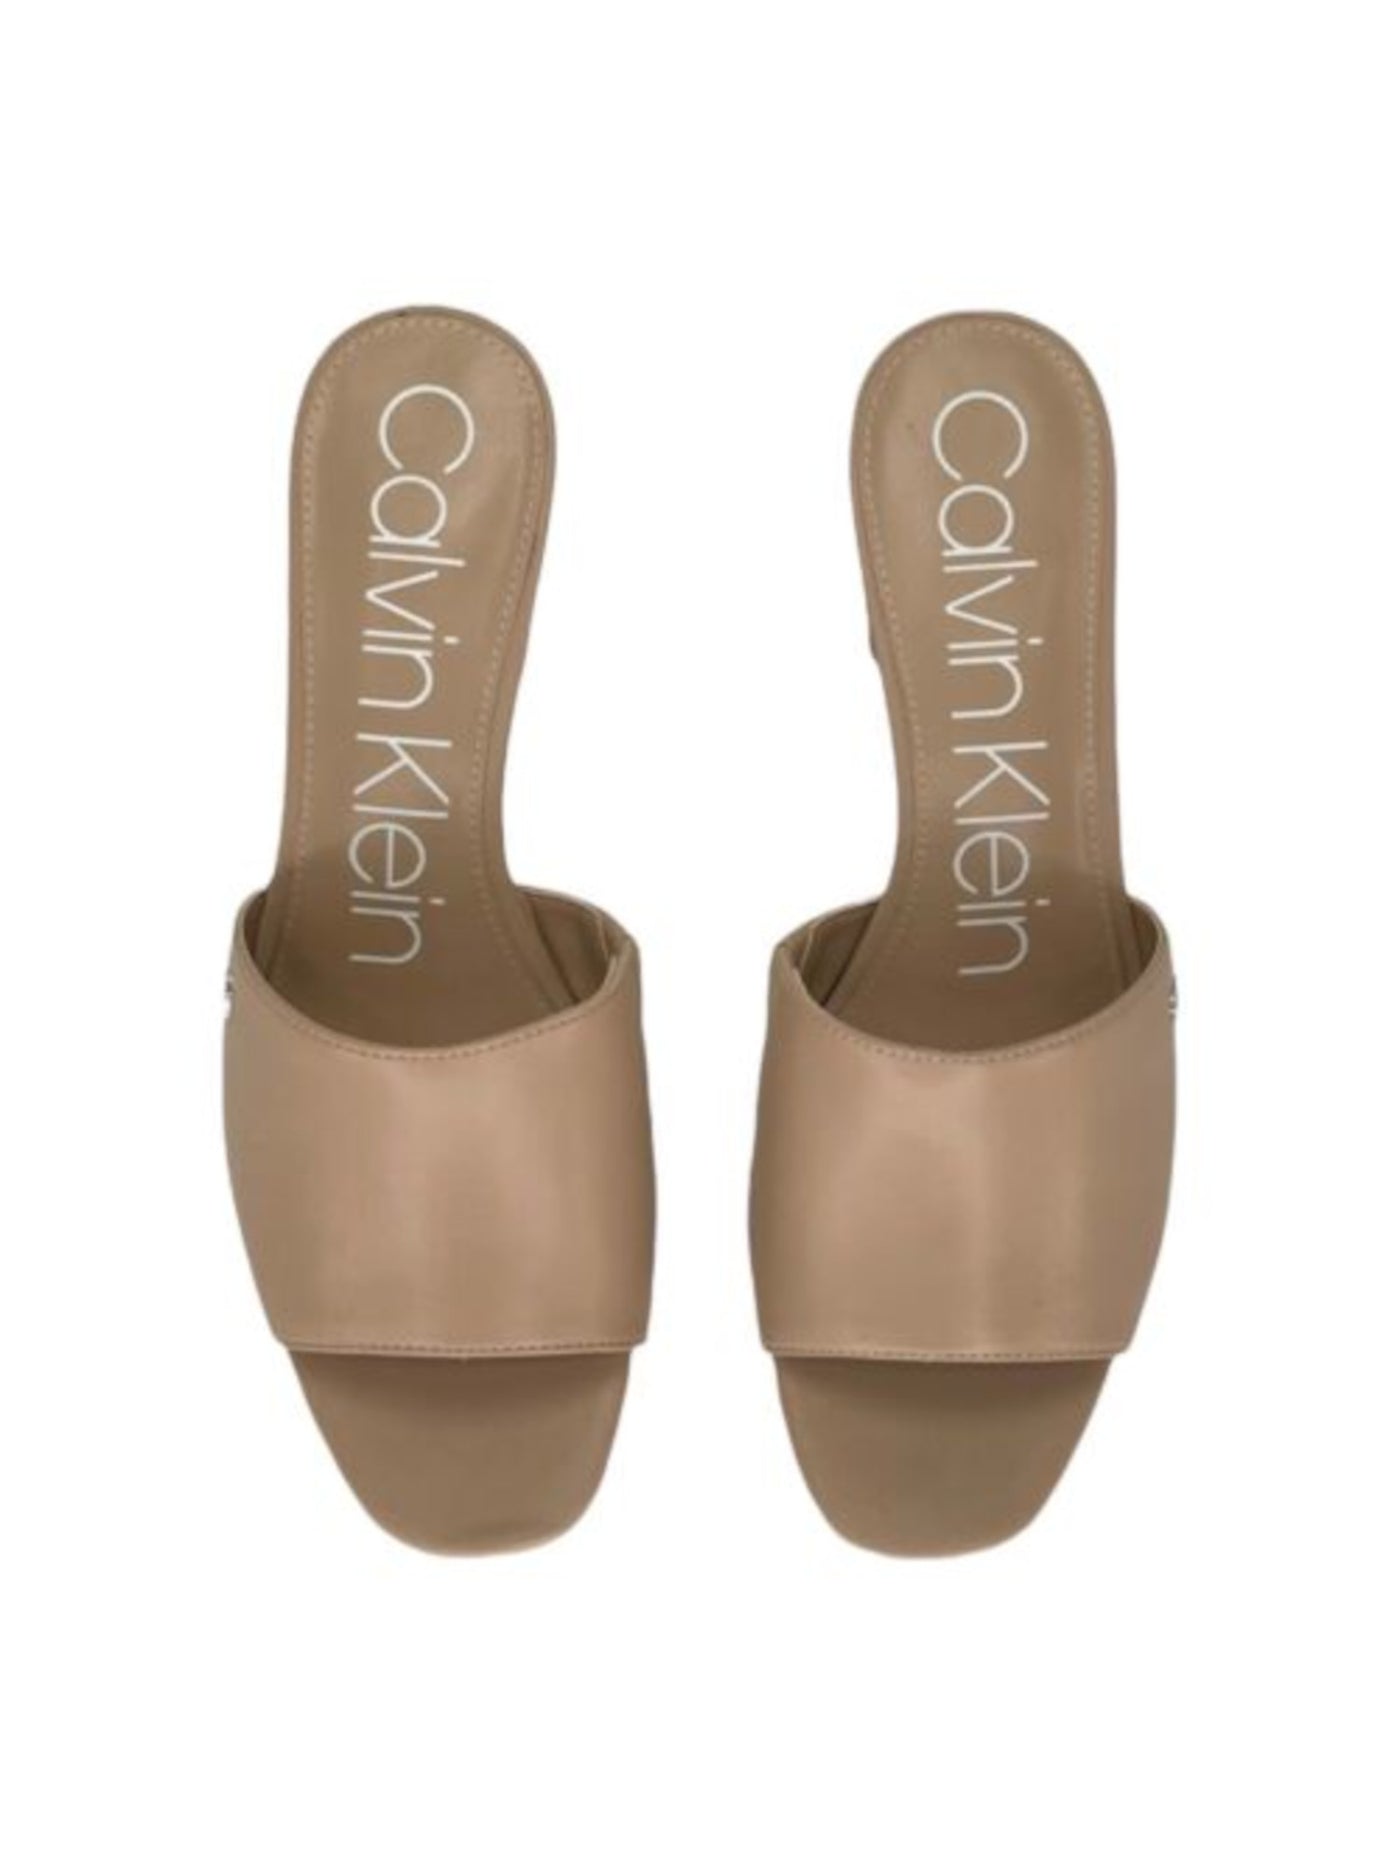 CALVIN KLEIN Womens Beige Goring Logo Cushioned Slip Resistant Carisma Square Toe Block Heel Slip On Dress Sandals Shoes 8